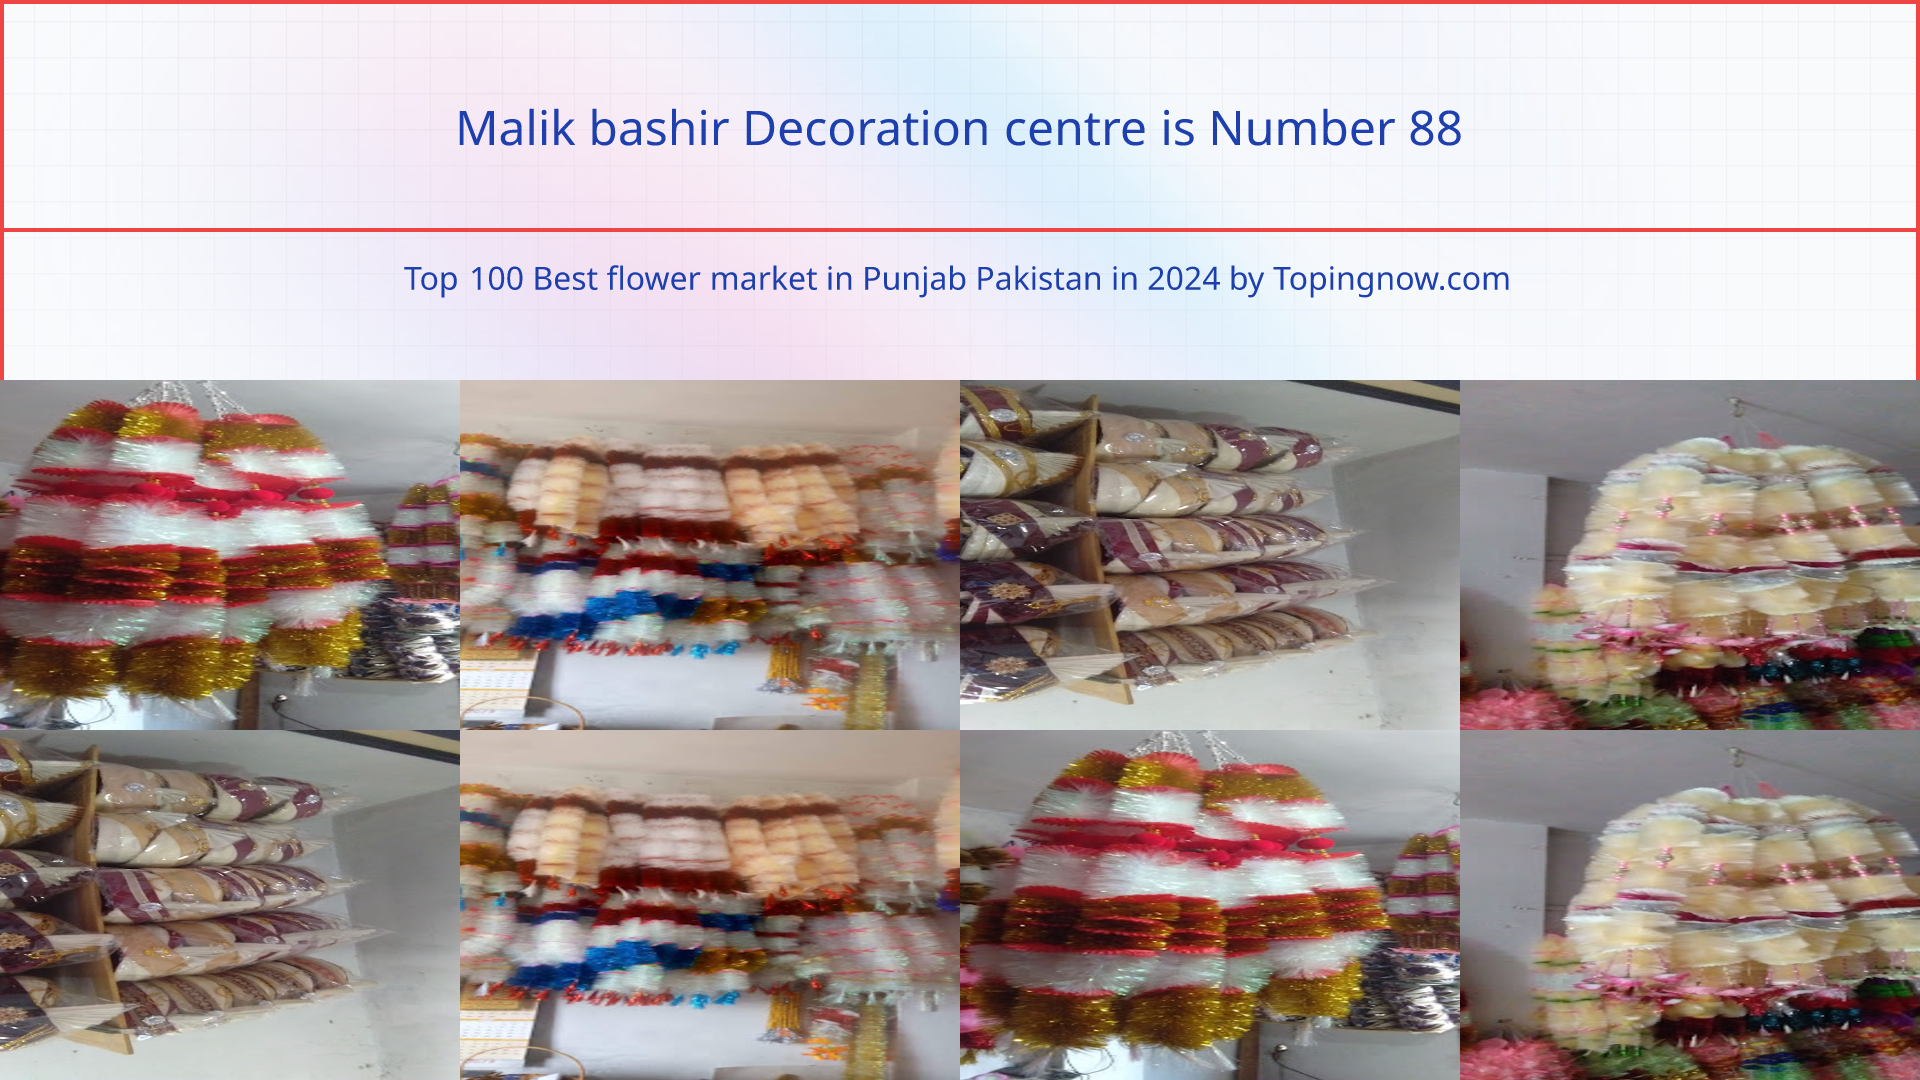 Malik bashir Decoration centre: Top 100 Best flower market in Punjab Pakistan in 2024